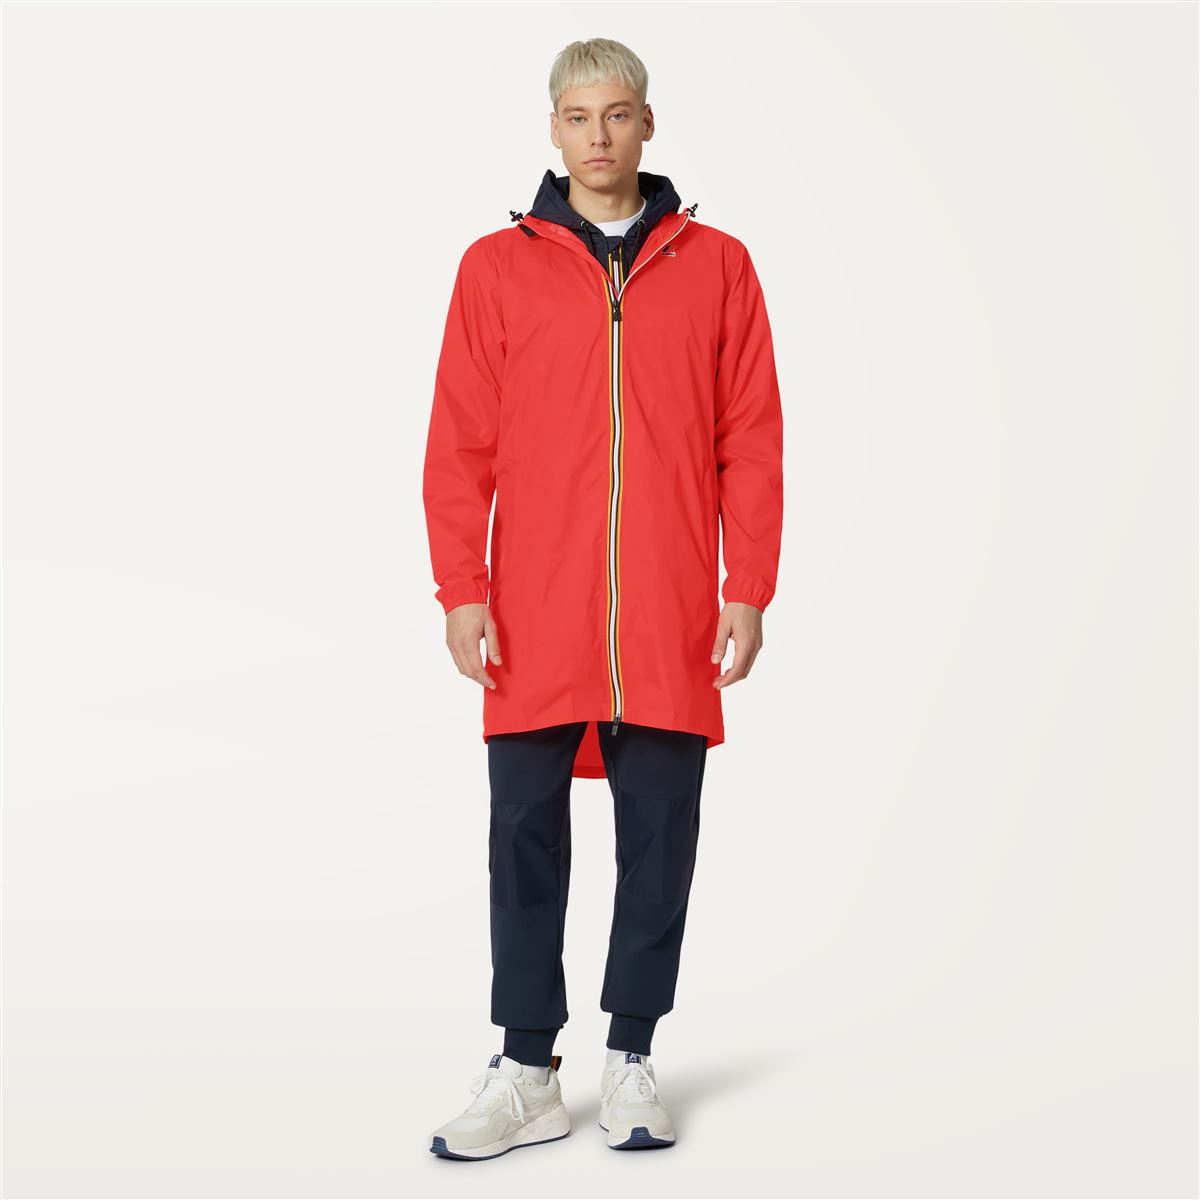 Eiffel - Unisex Waterproof Packable Long Rain Jacket in Red Papavero